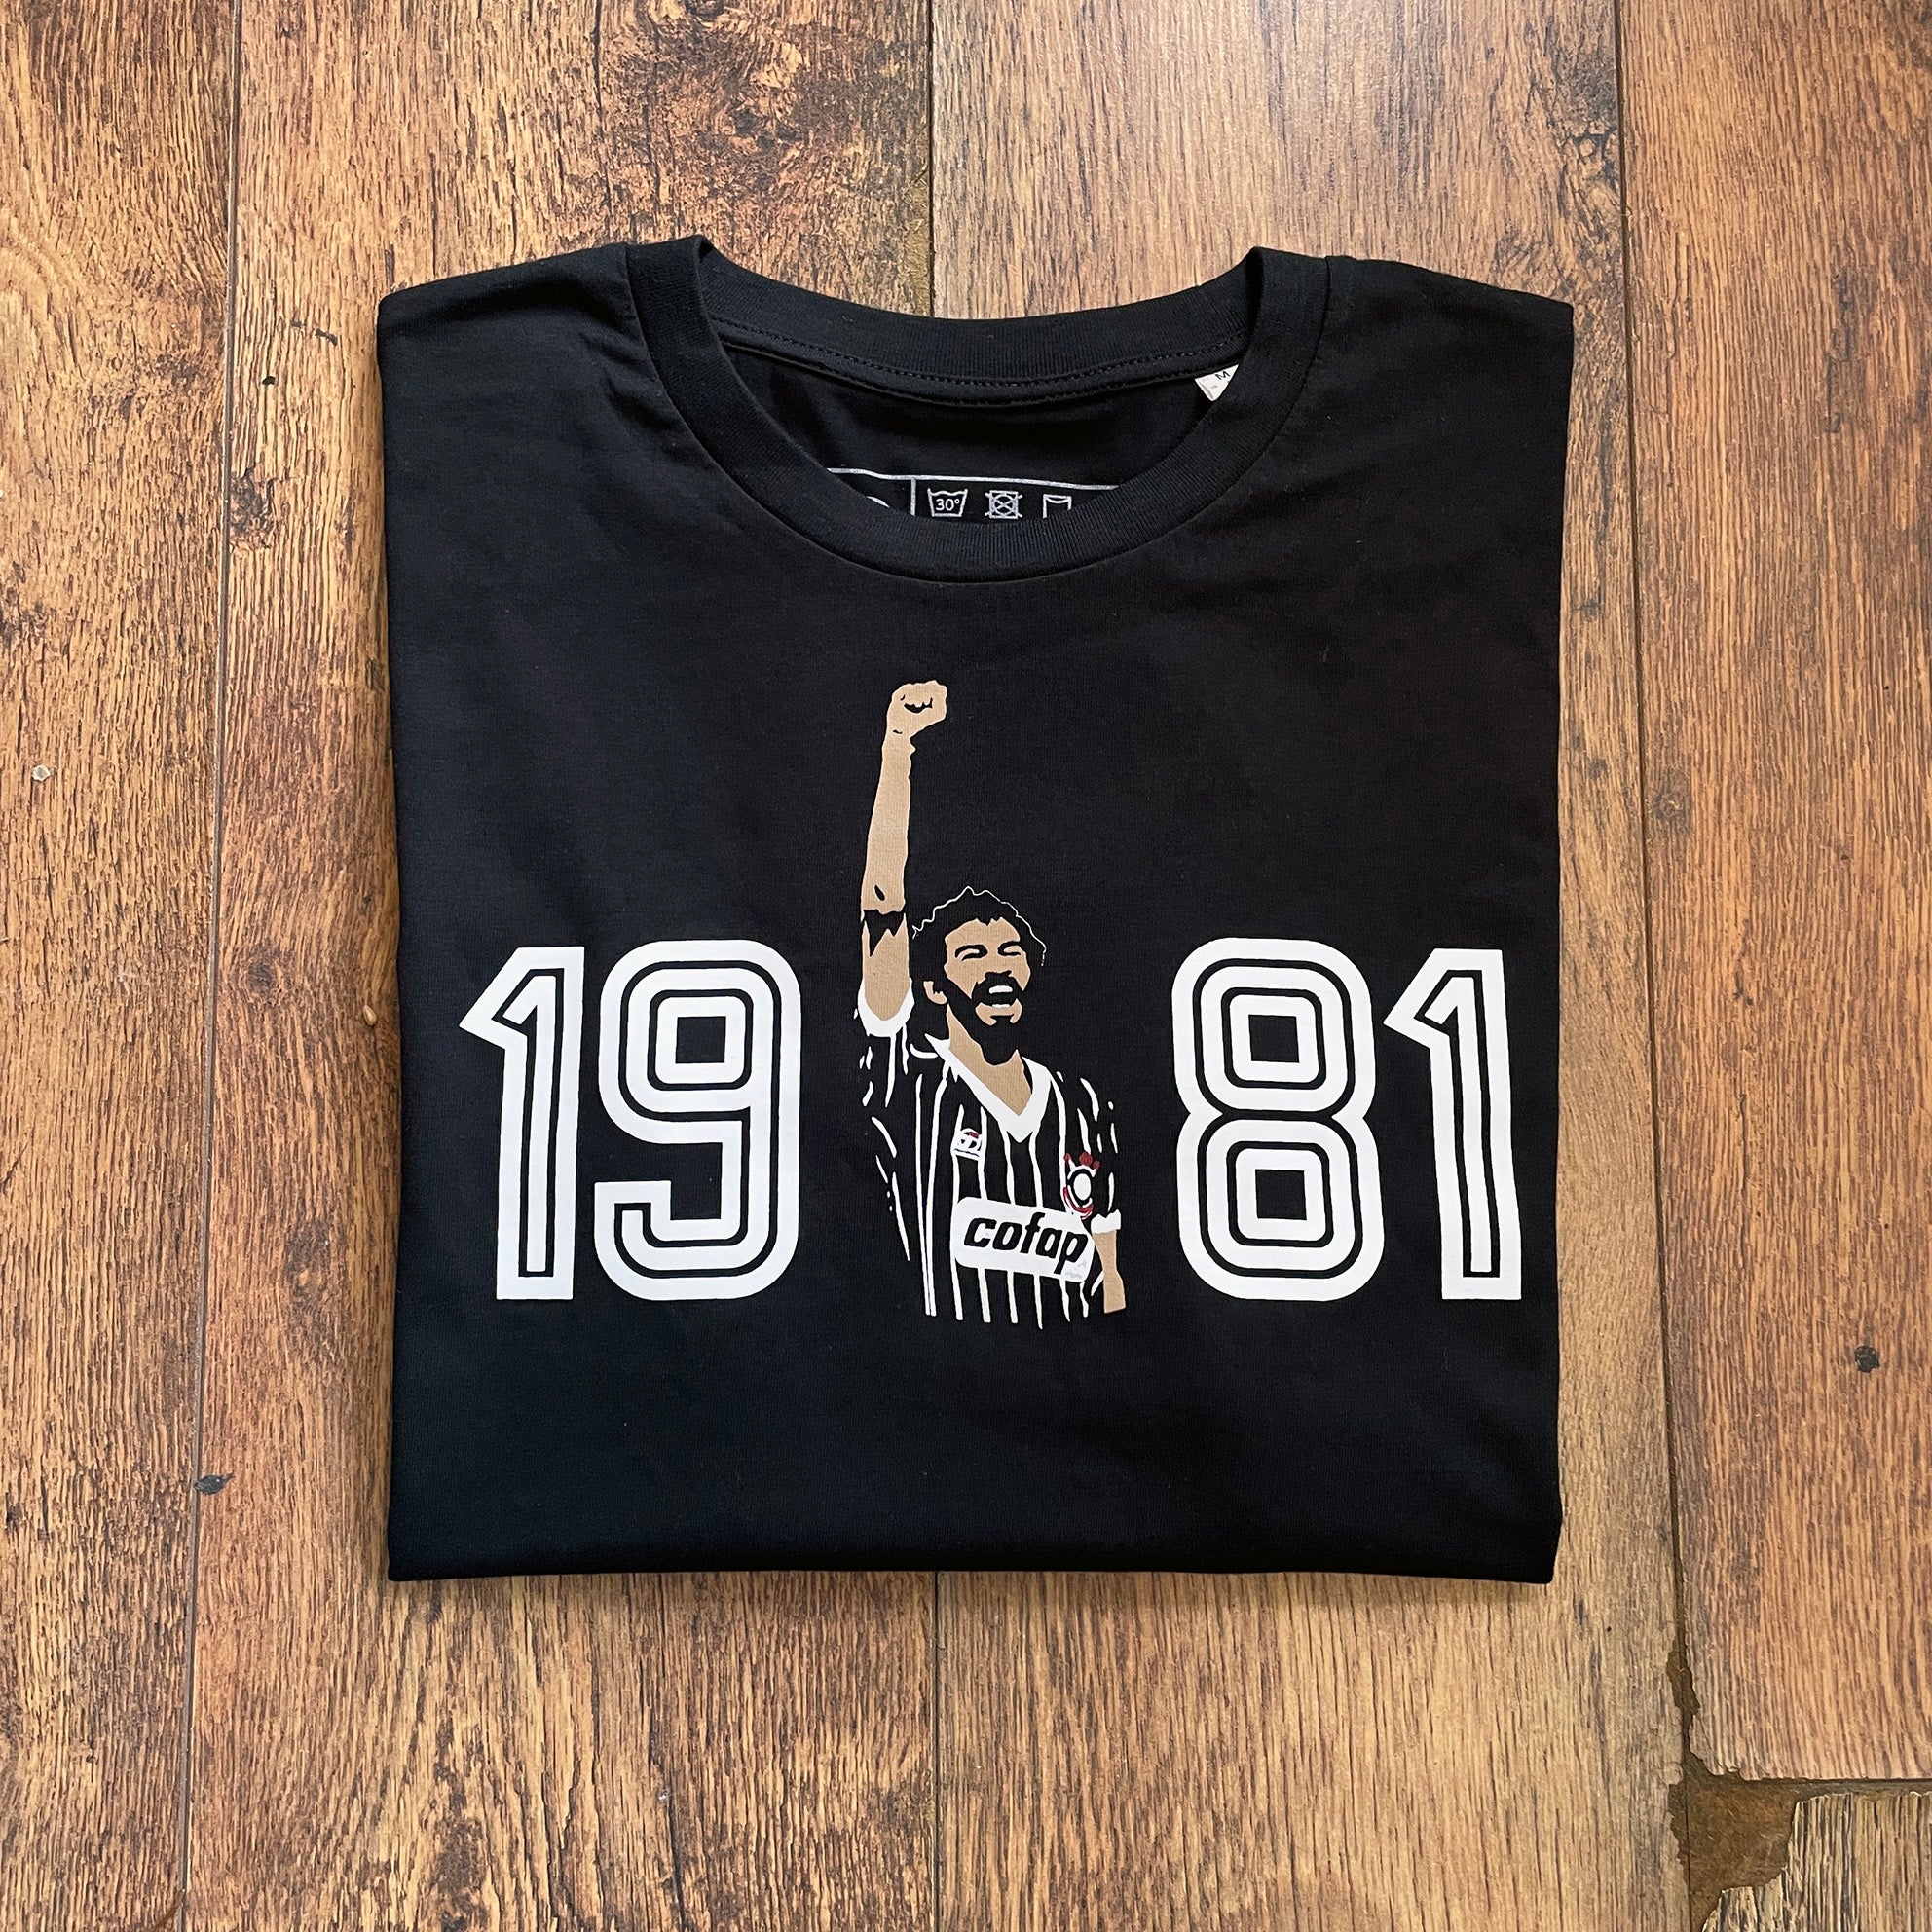 Socrates Corinthians shirt t-shirt